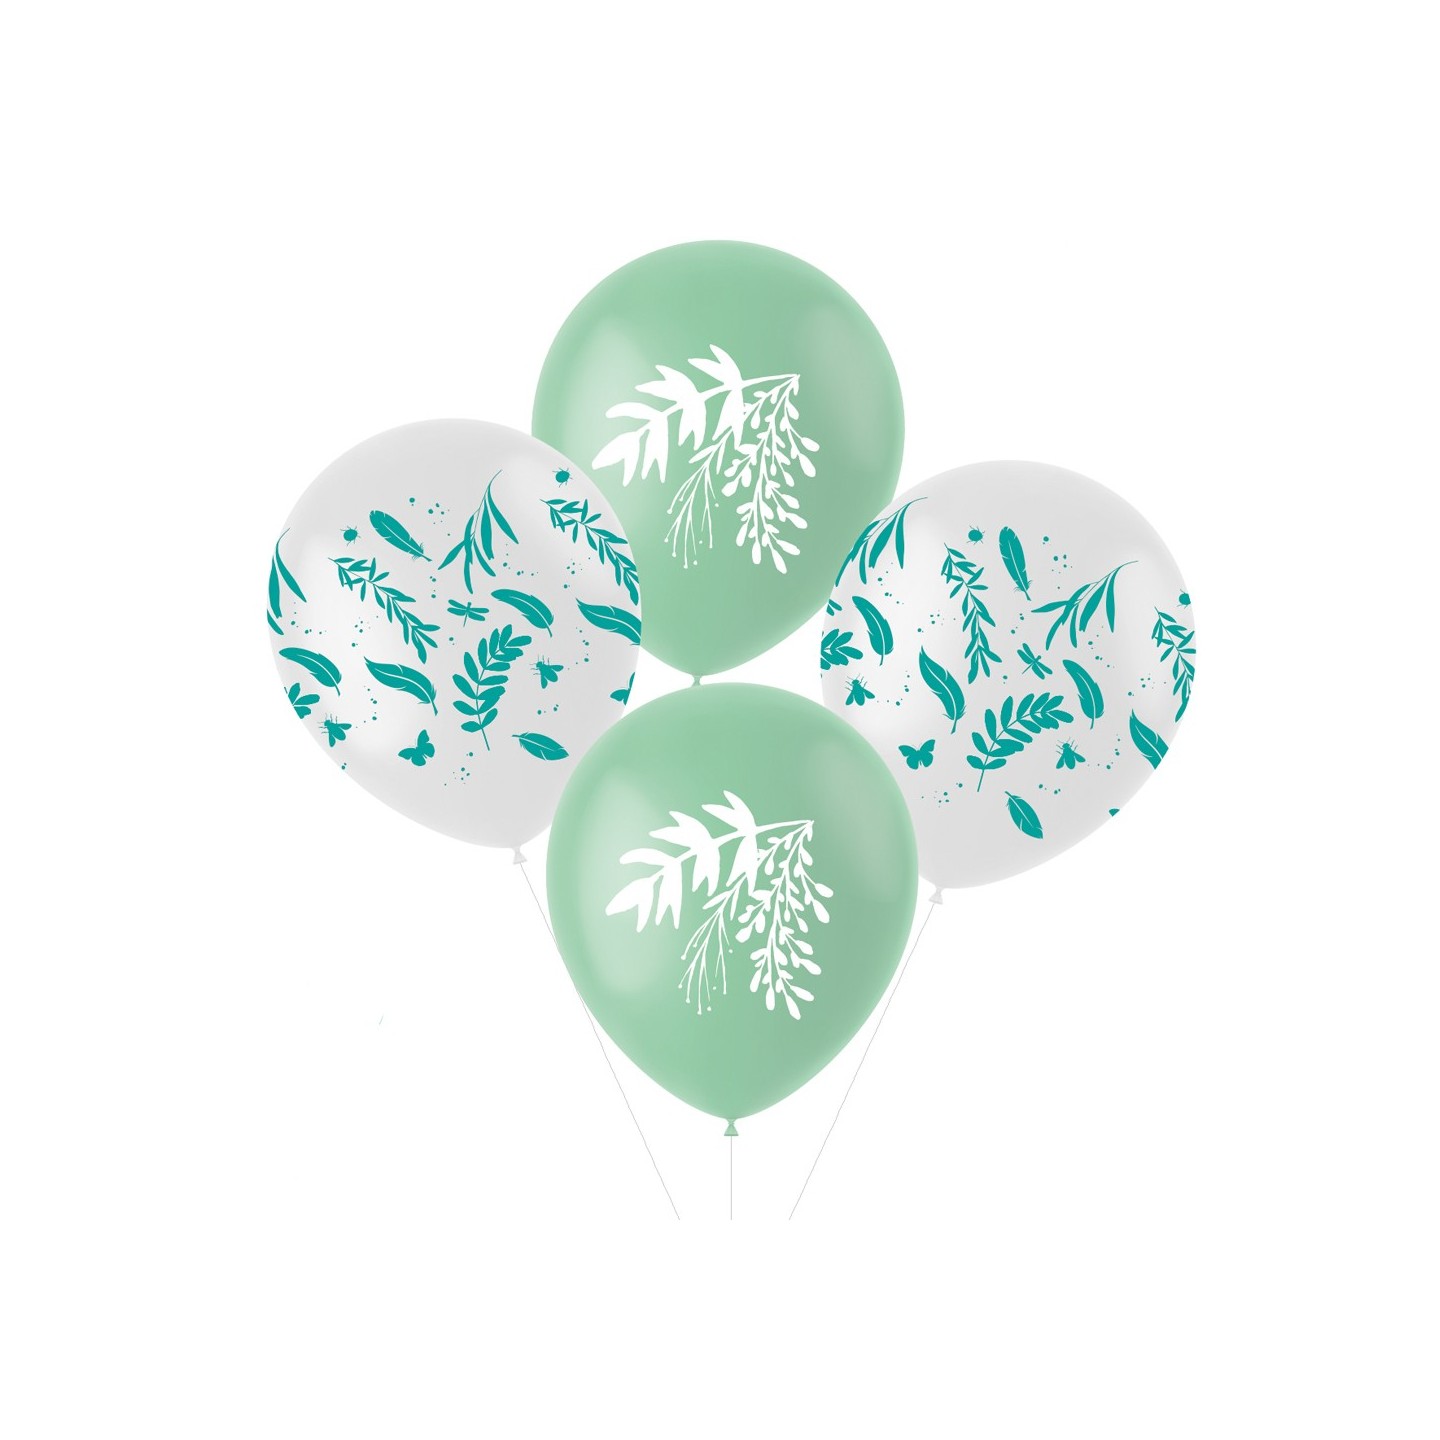 communie ballonnen versiering lentefeest decoratie